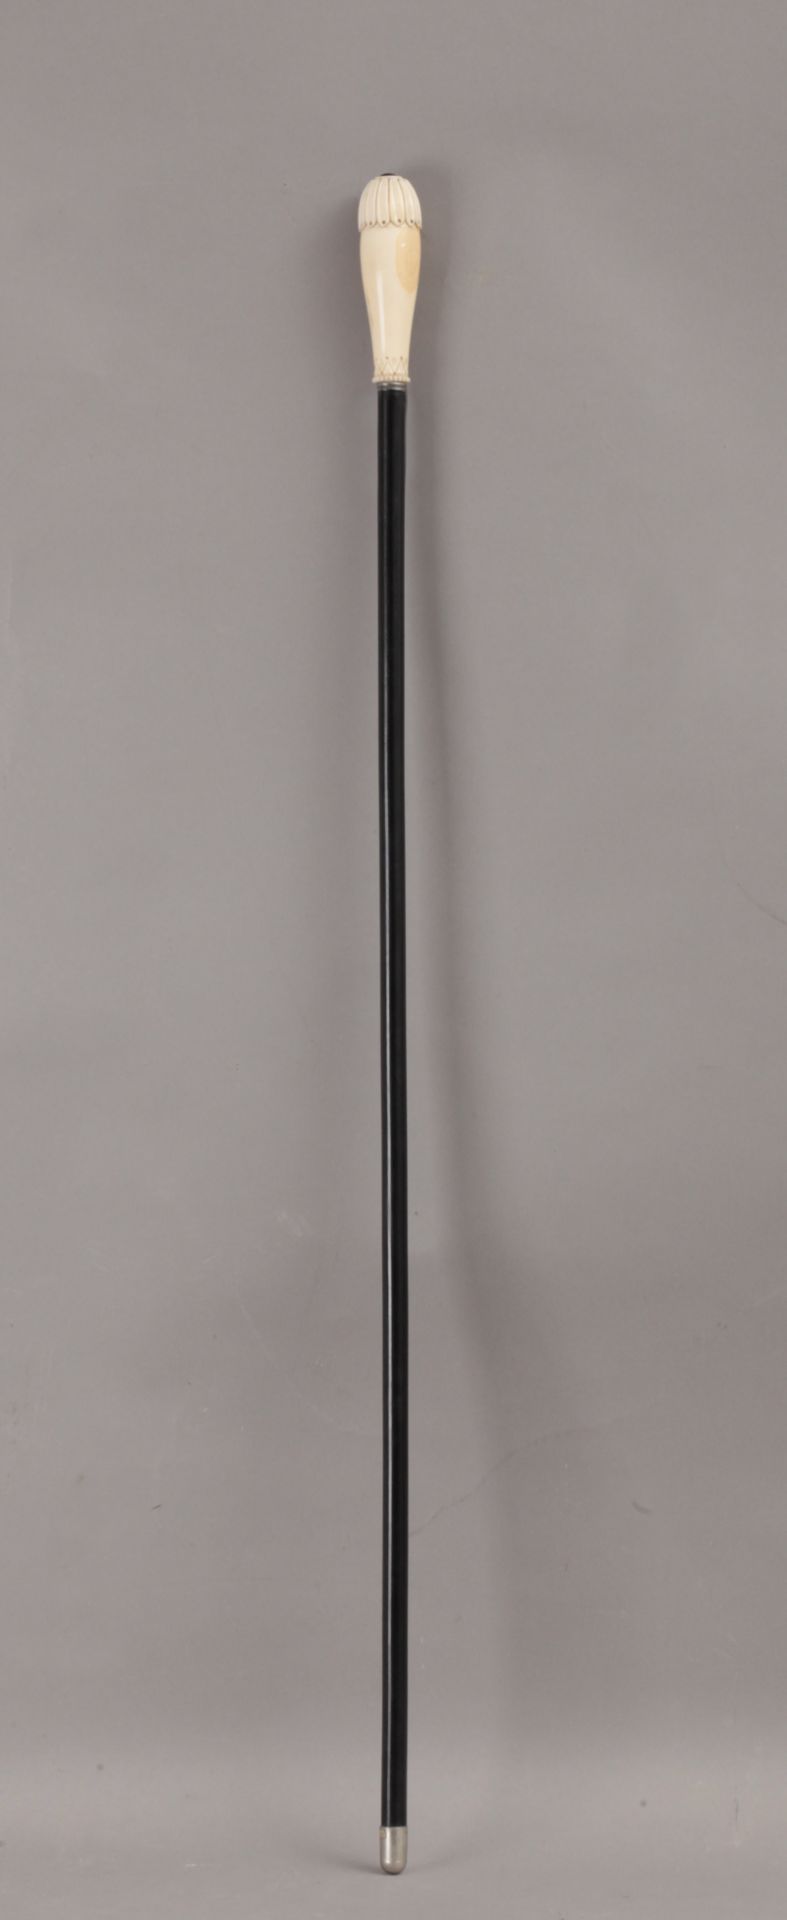 A 19th century ivory handled dress cane - Image 2 of 3